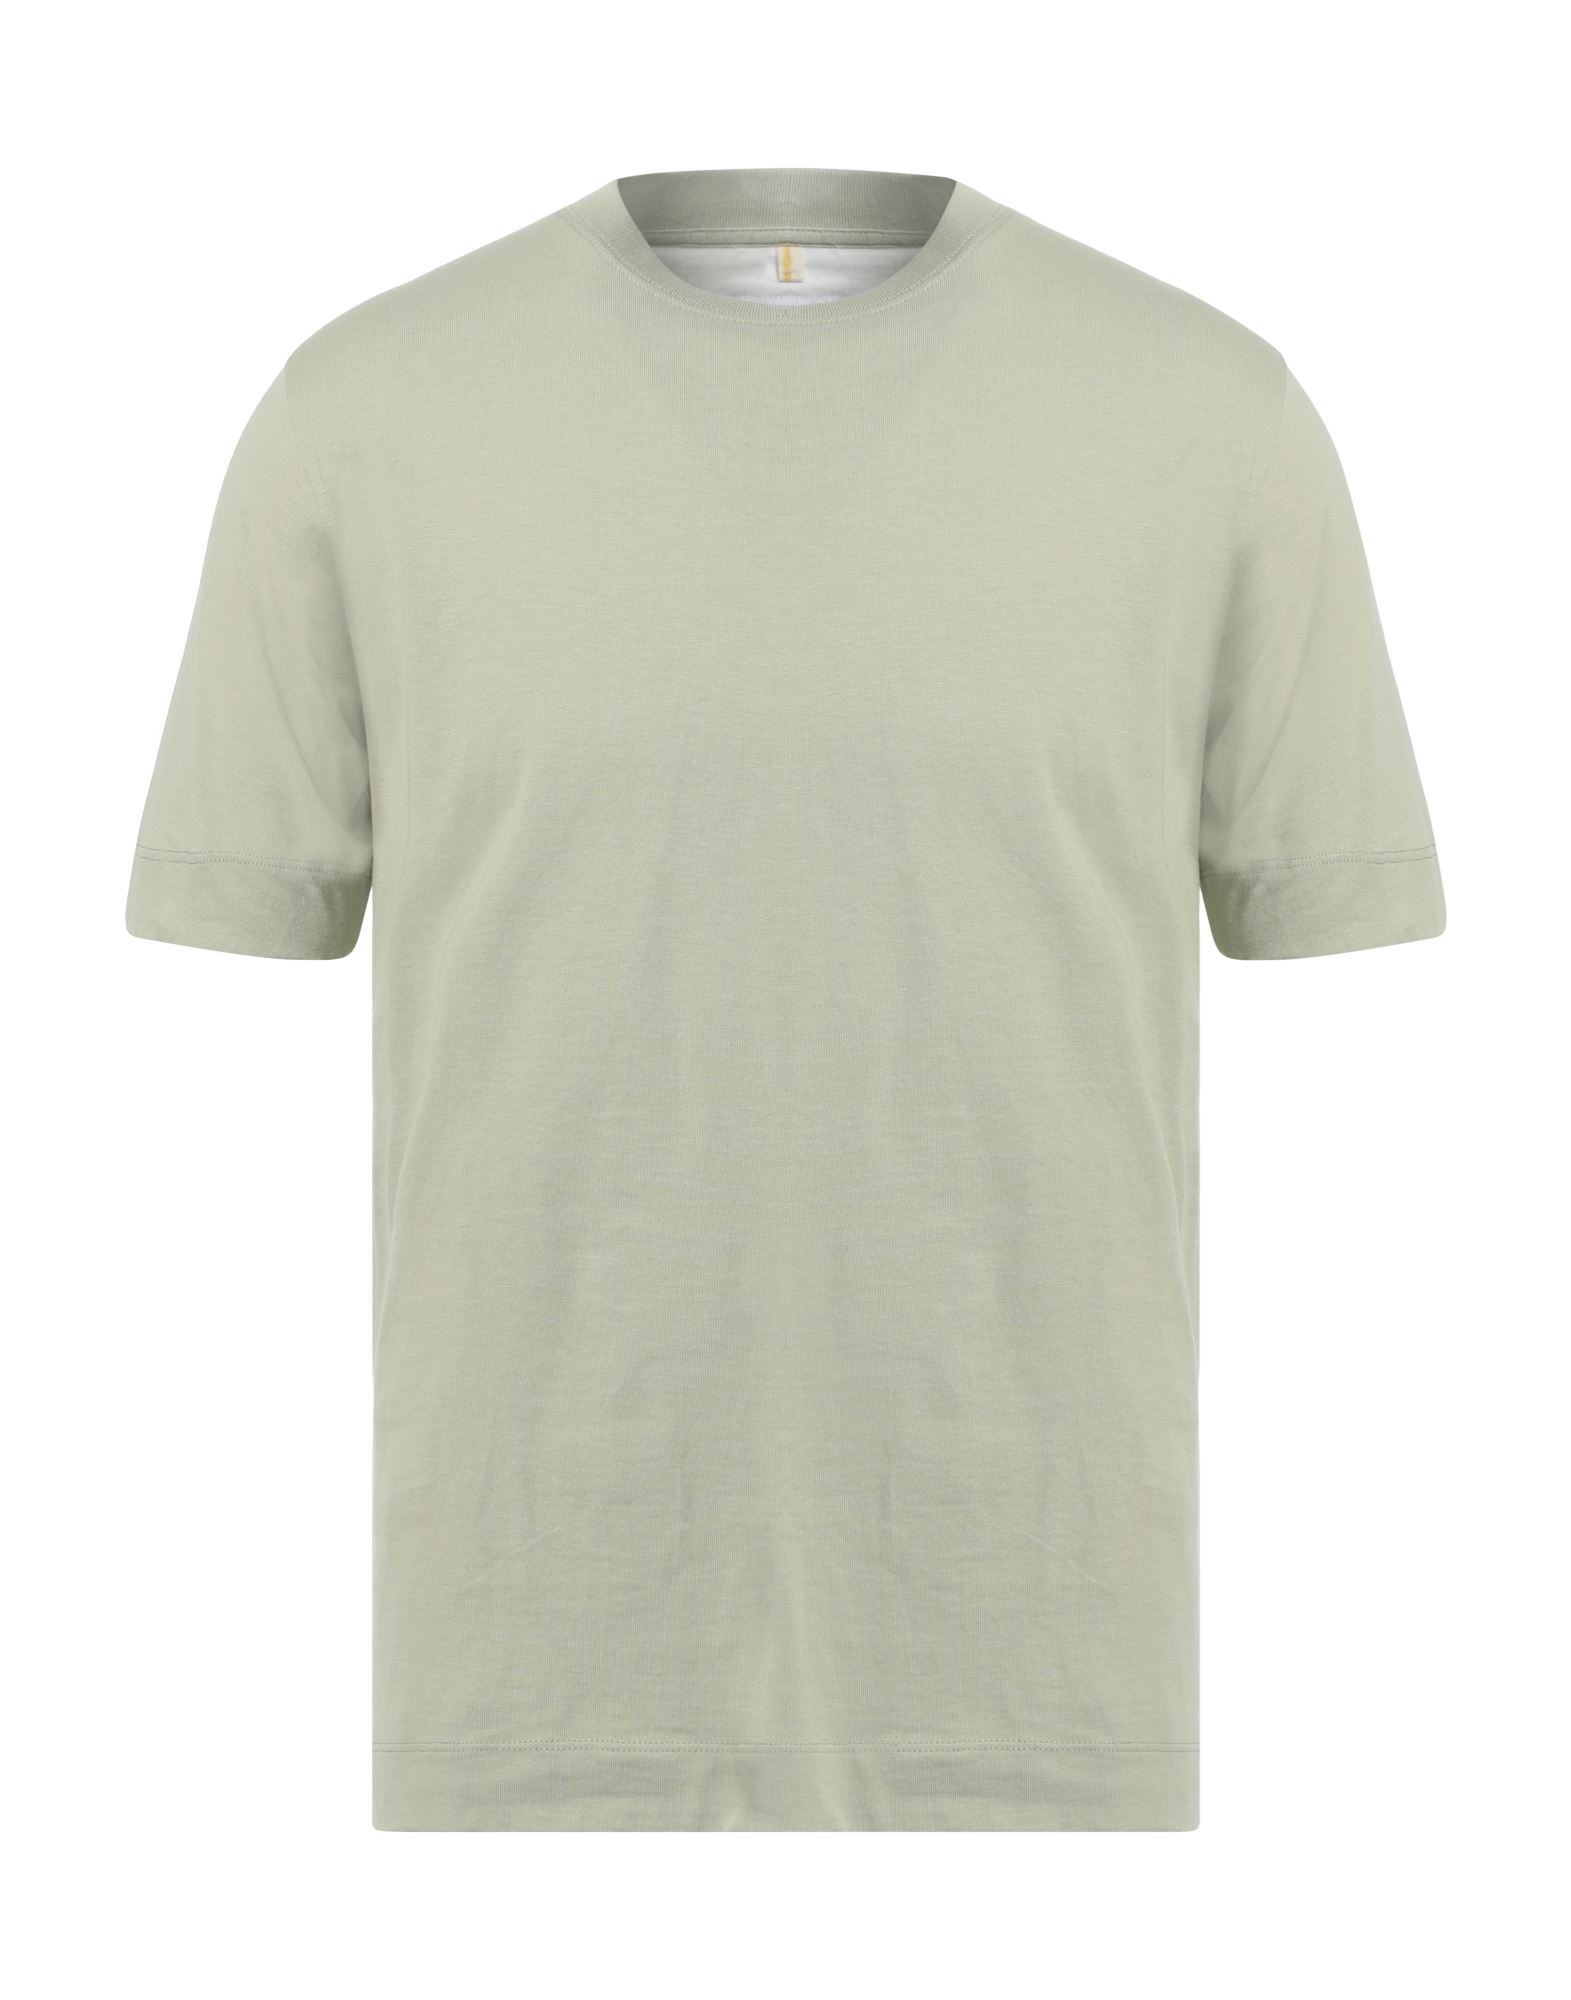 Gazzarrini T-shirts In Sage Green